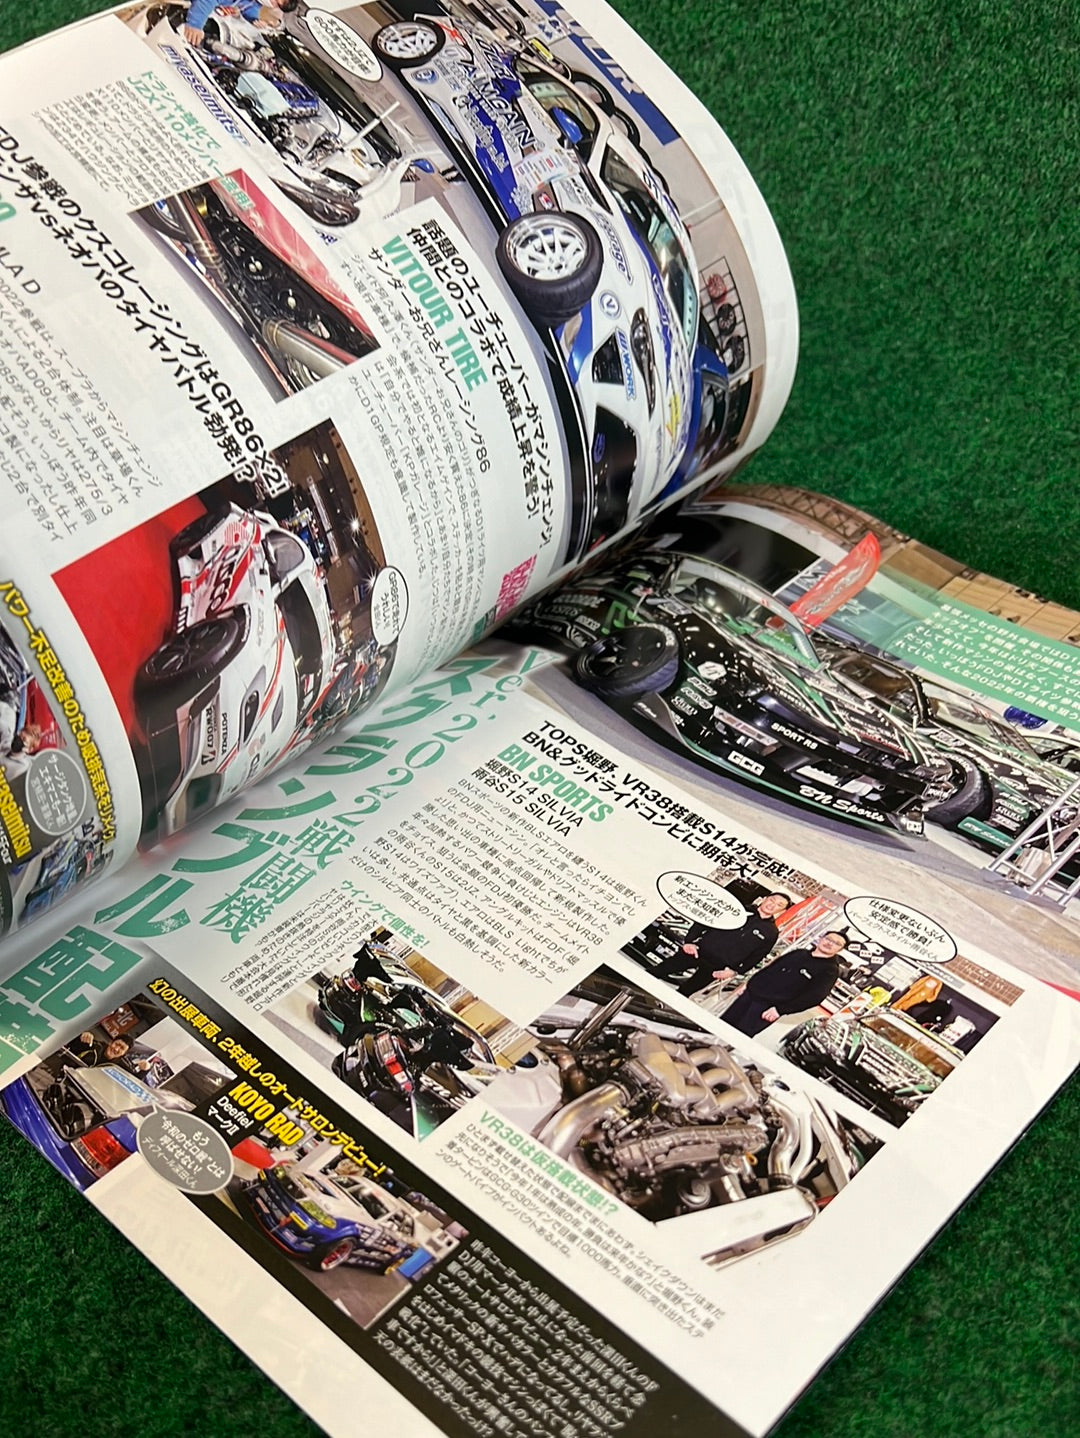 Drift Tengoku Magazine -  March 2022